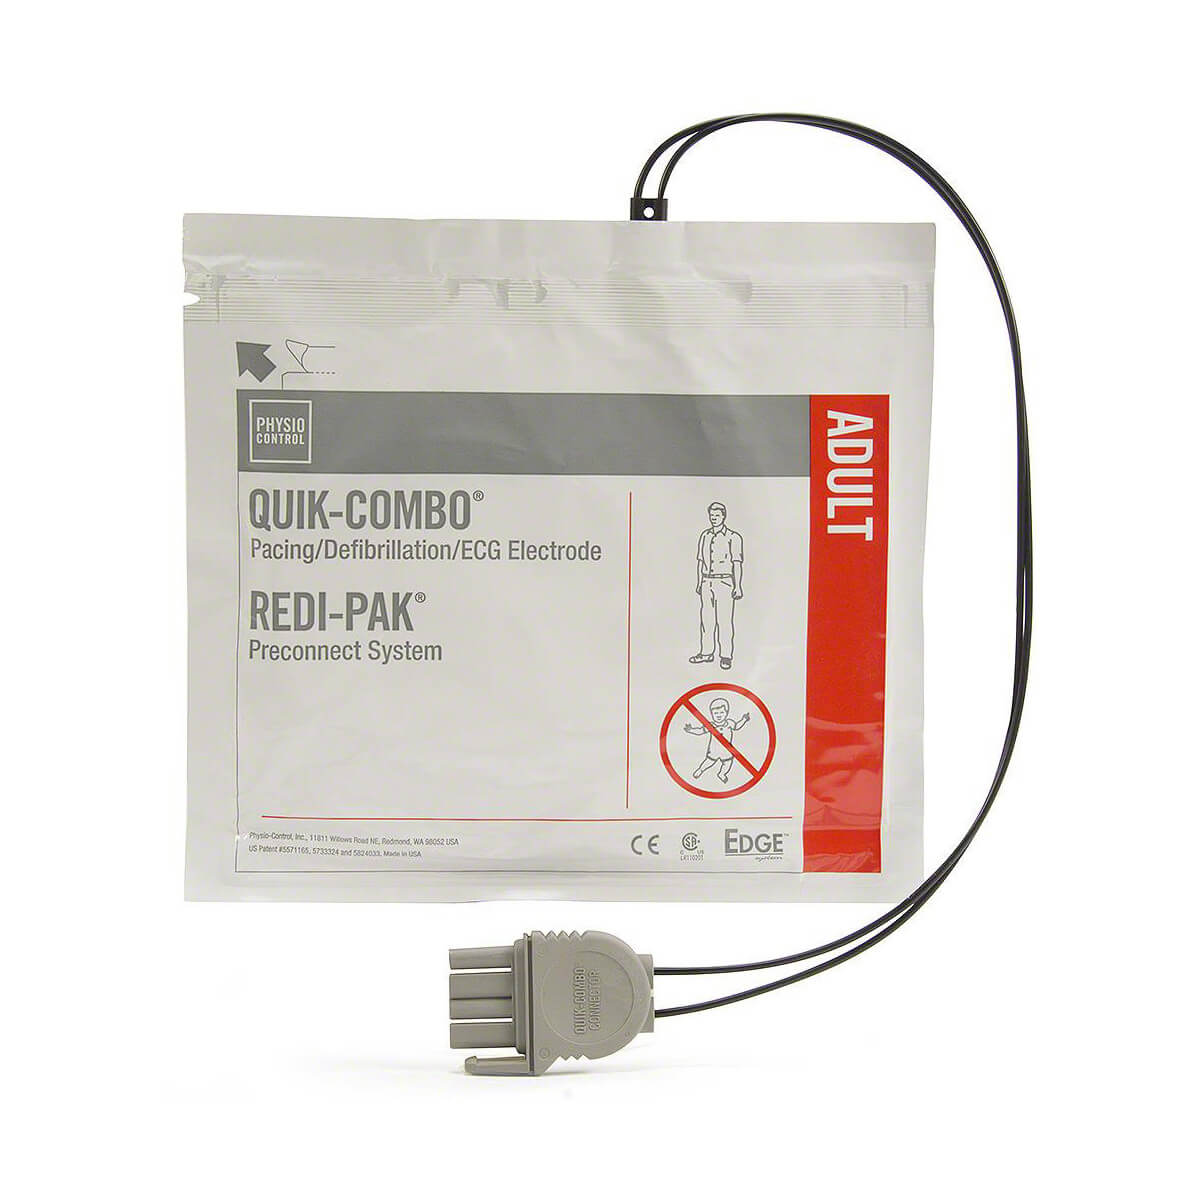 Defibrylator AED LIFEPAK 1000